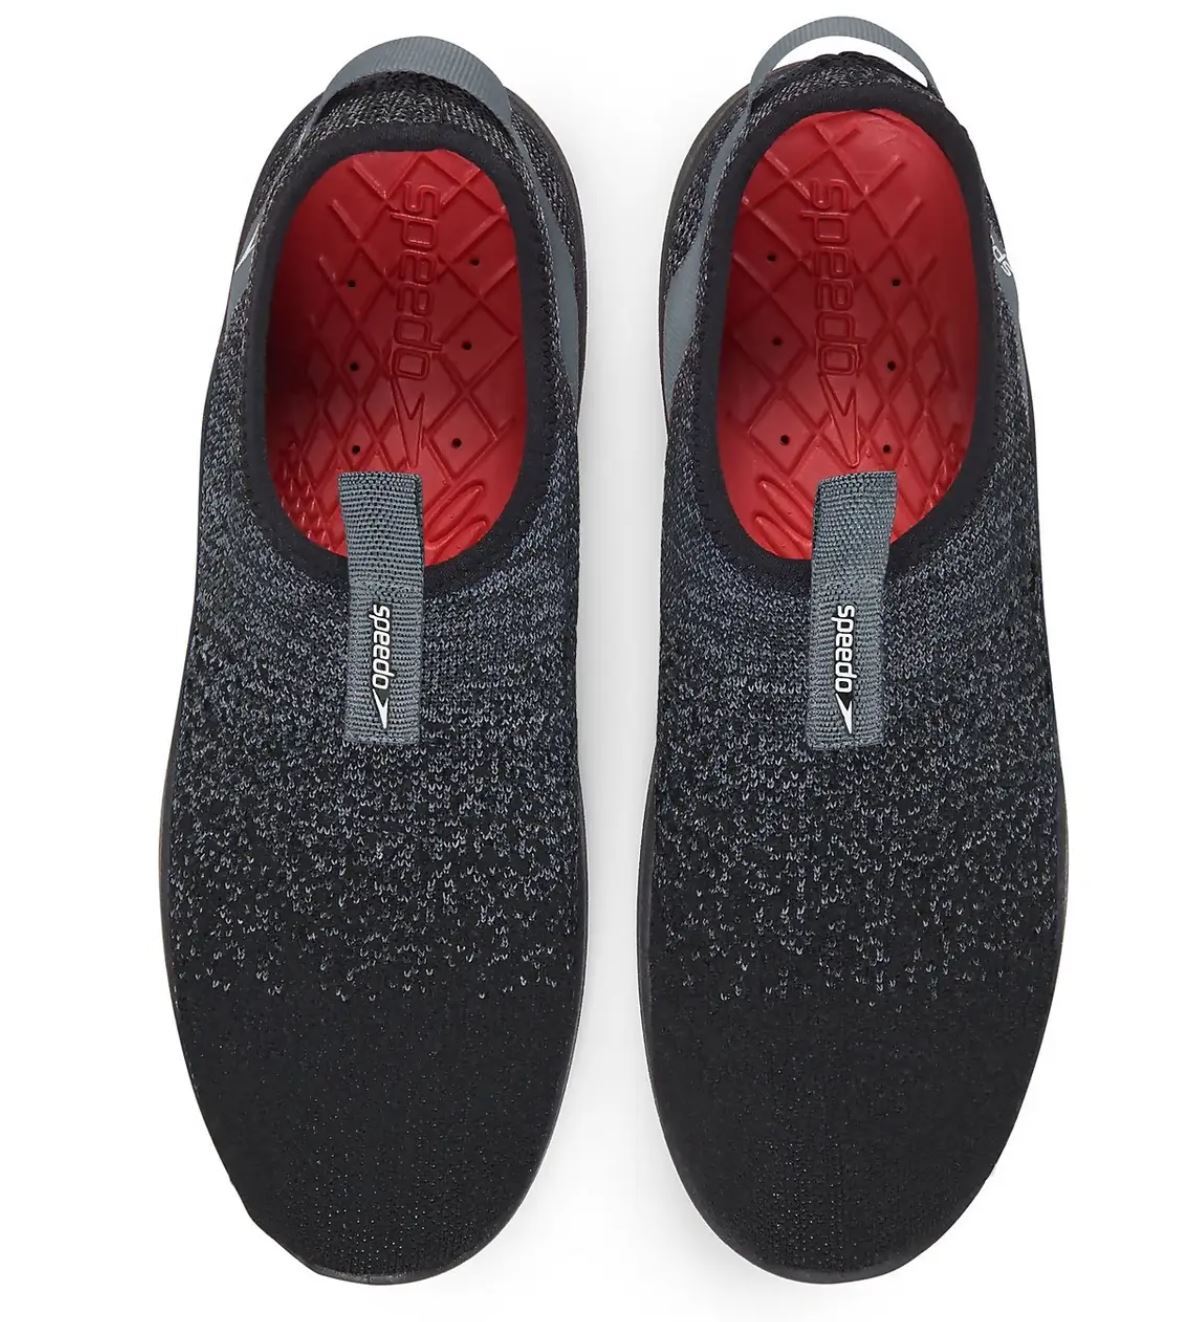 Speedo Men's Black/Gray Size 10 Surf Knit Pro Water Shoes